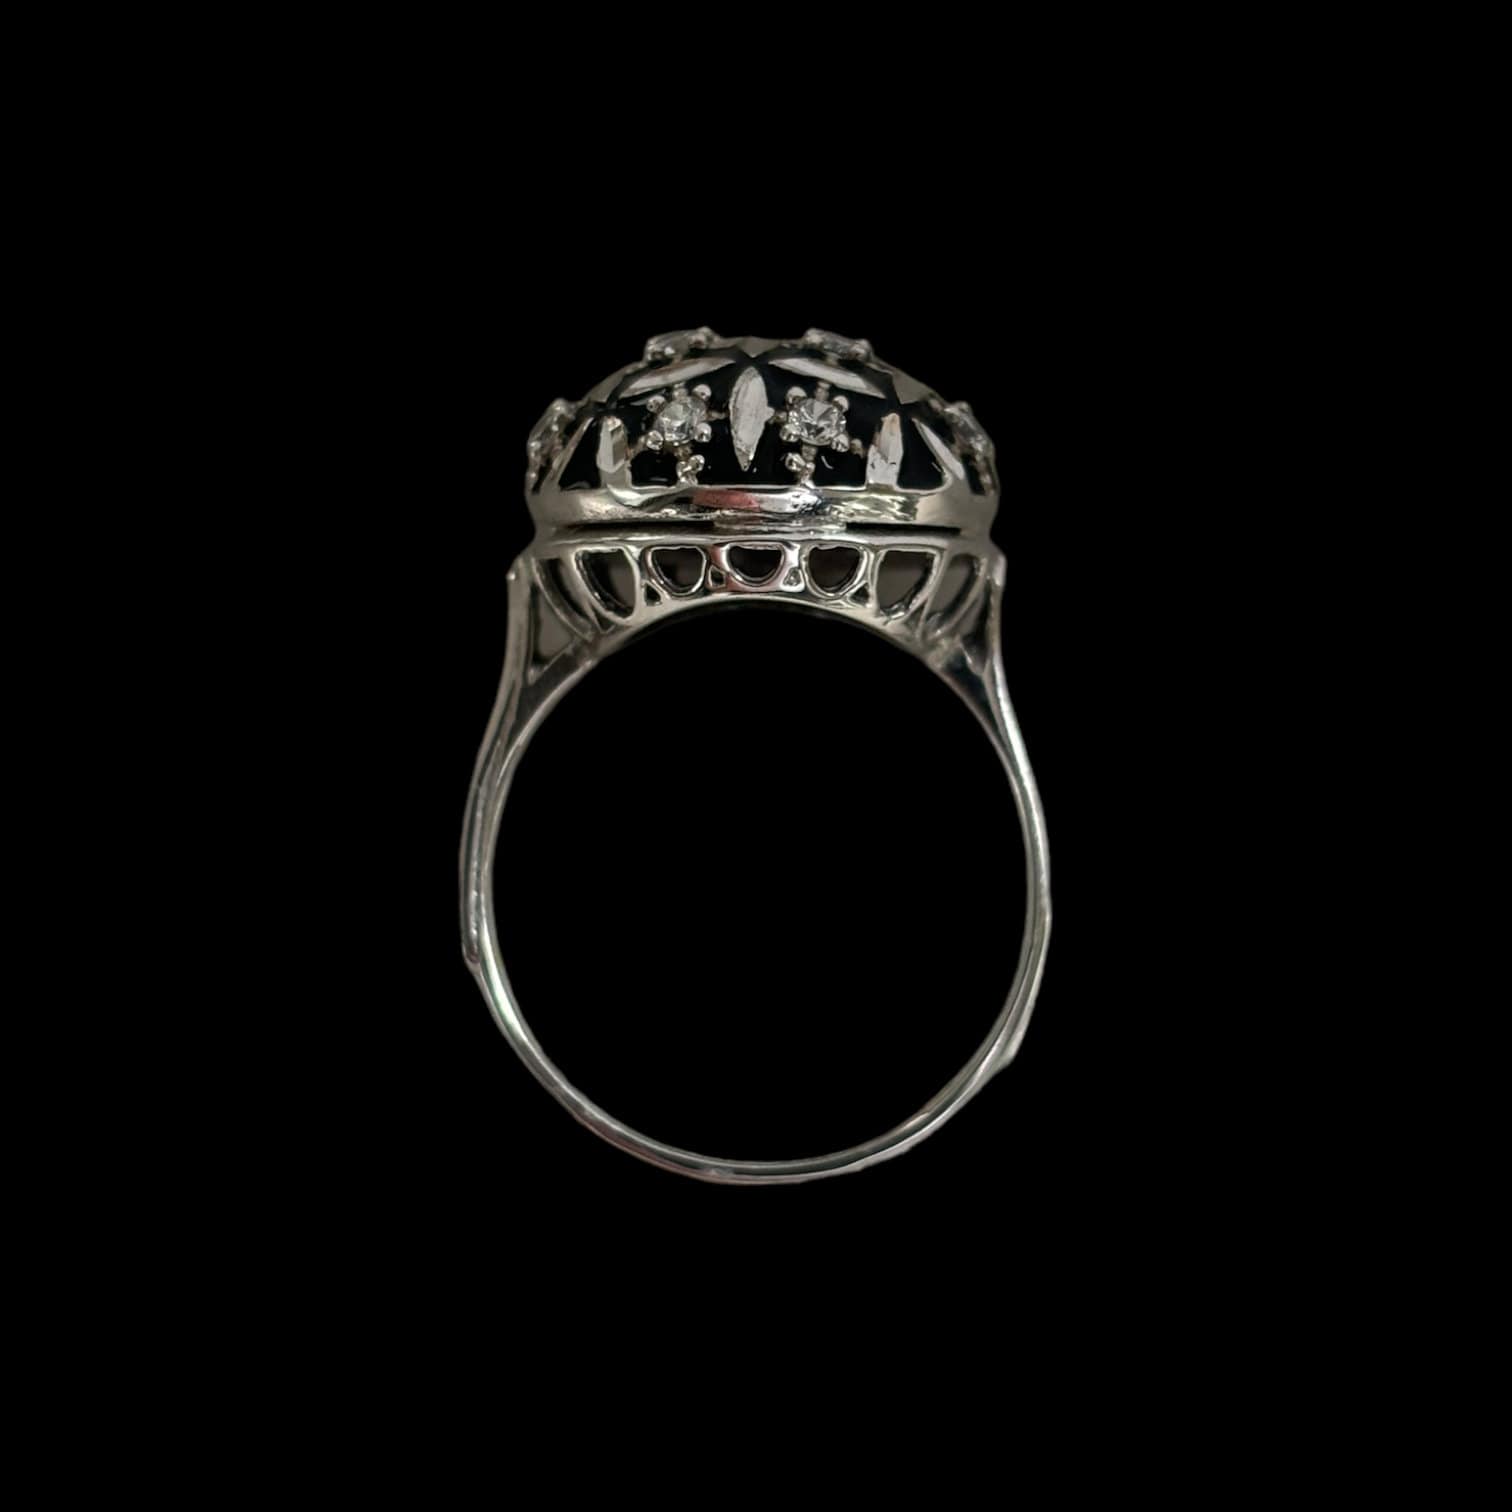 18k White Gold Black Enamel and Zirconium Ring - émail Noir Zircone Ring, UNGARI profile standing on black background